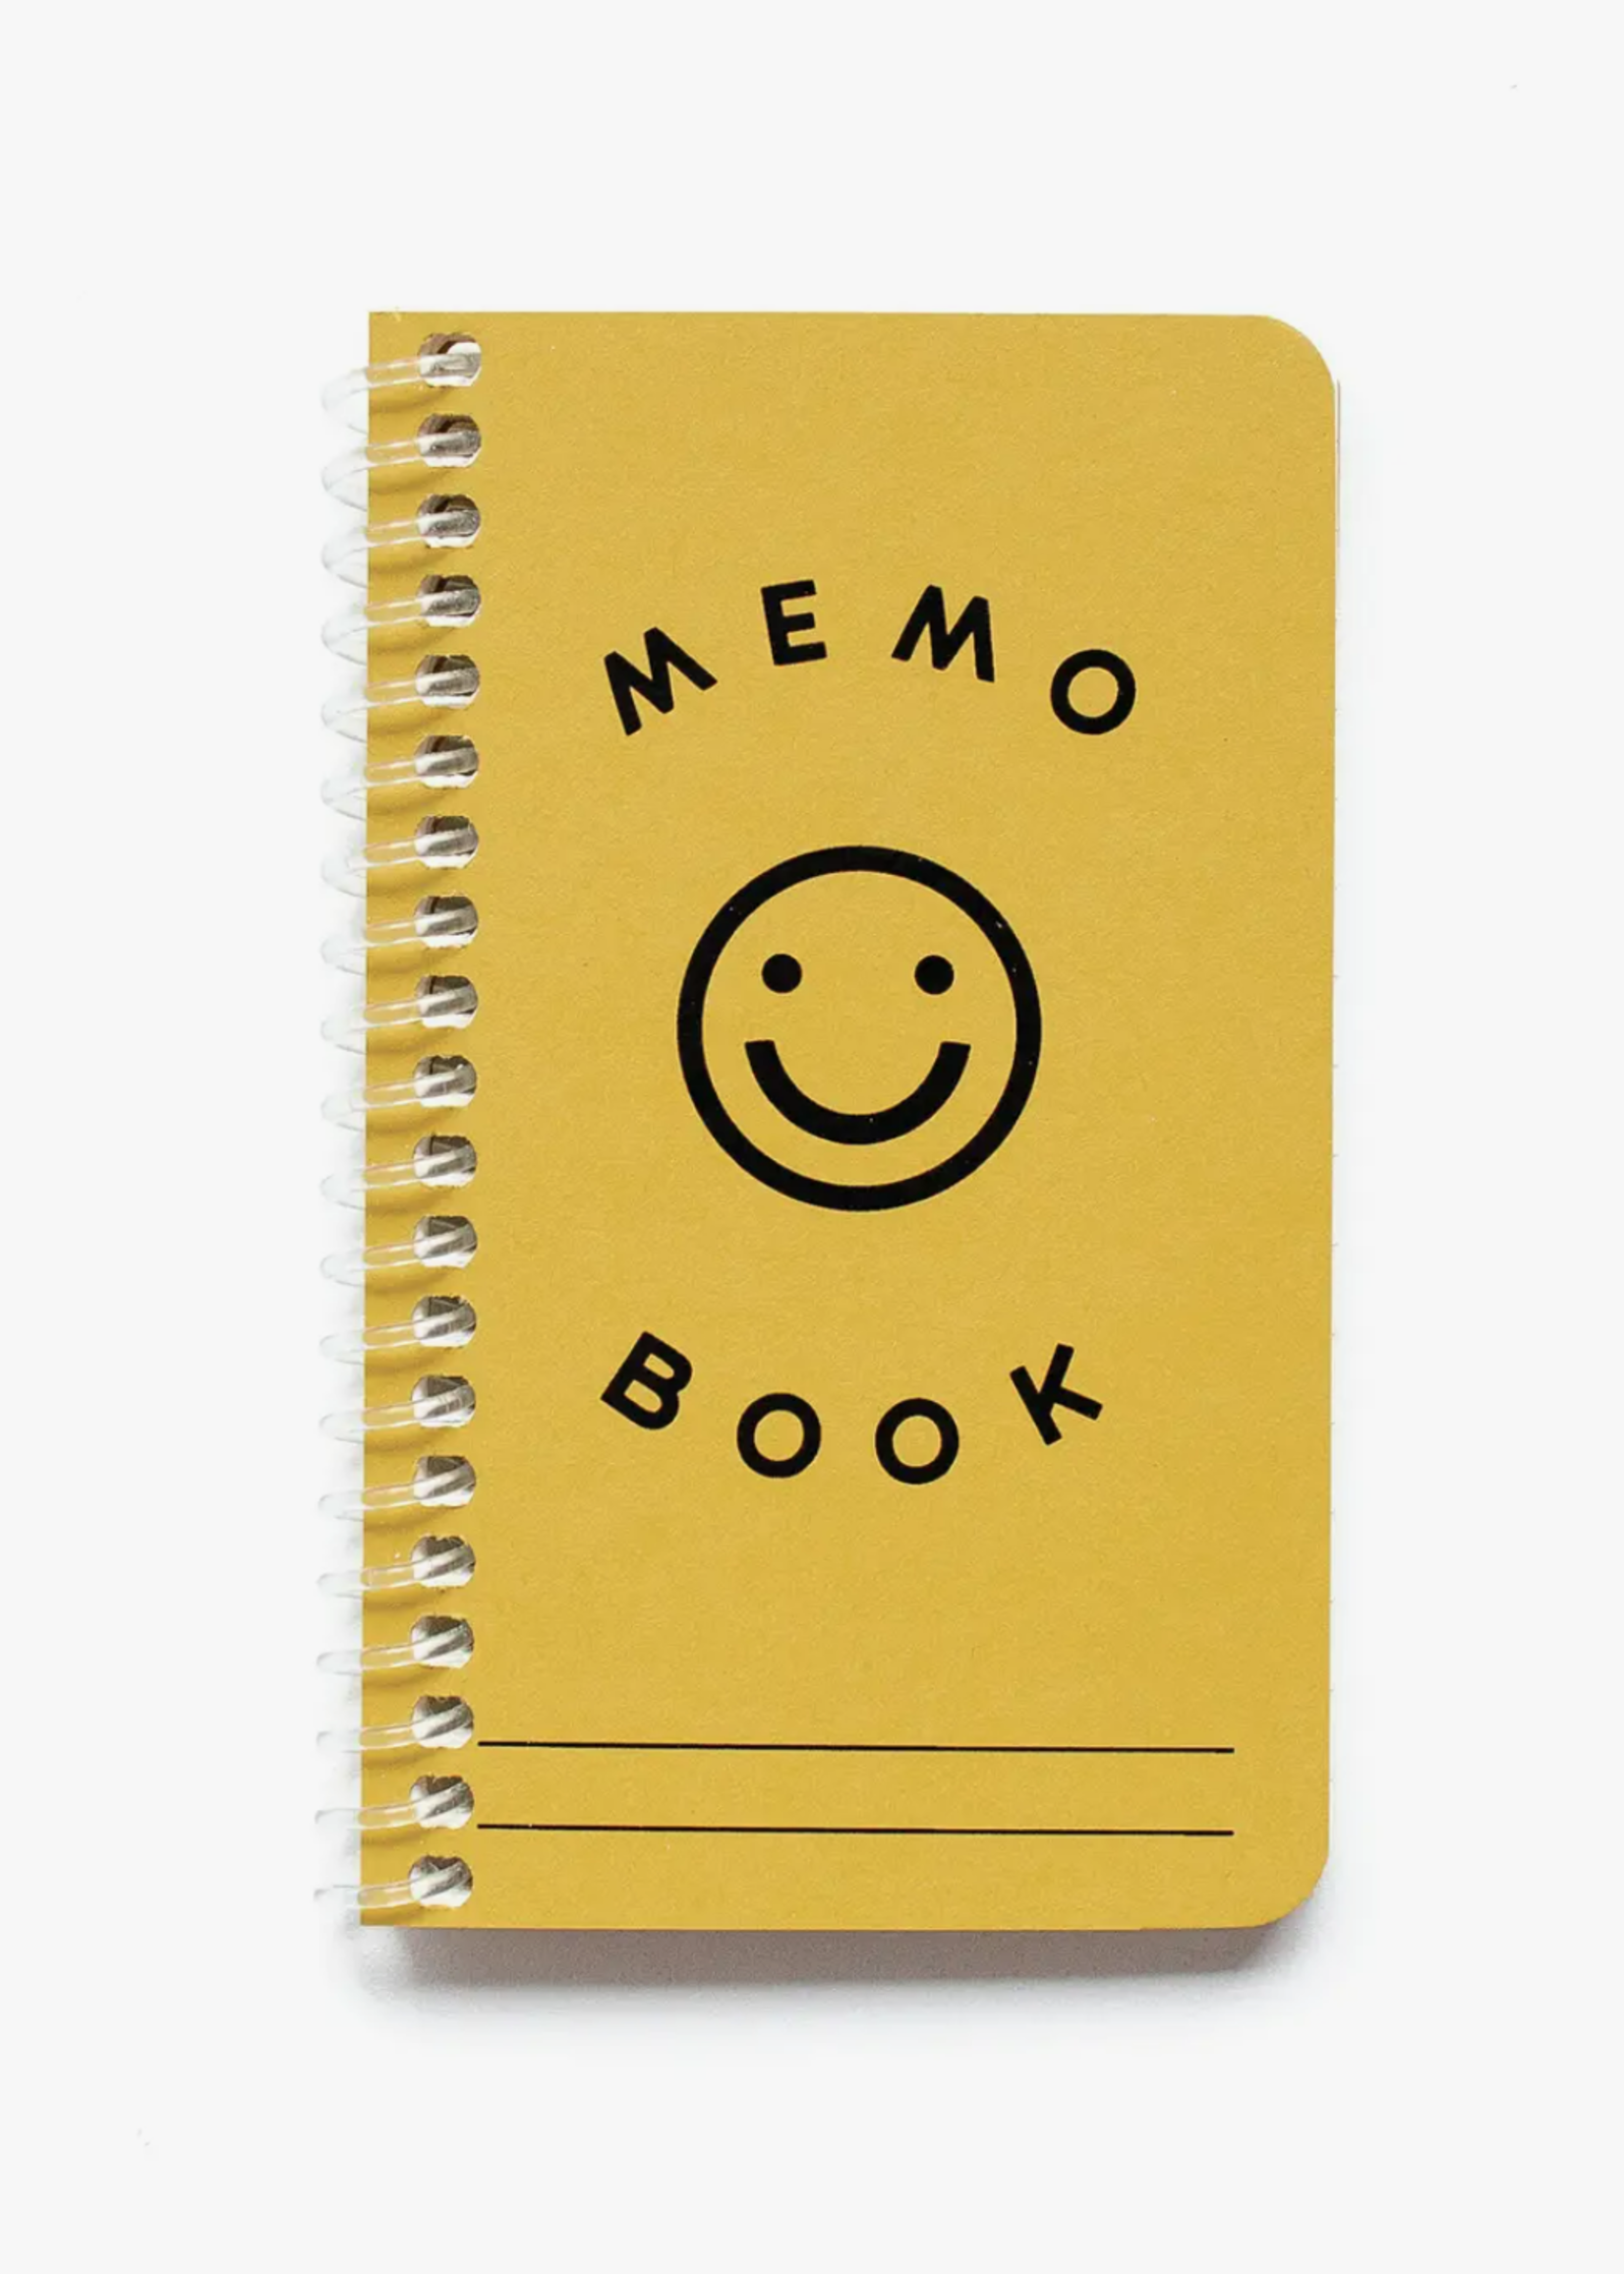 Memo Book